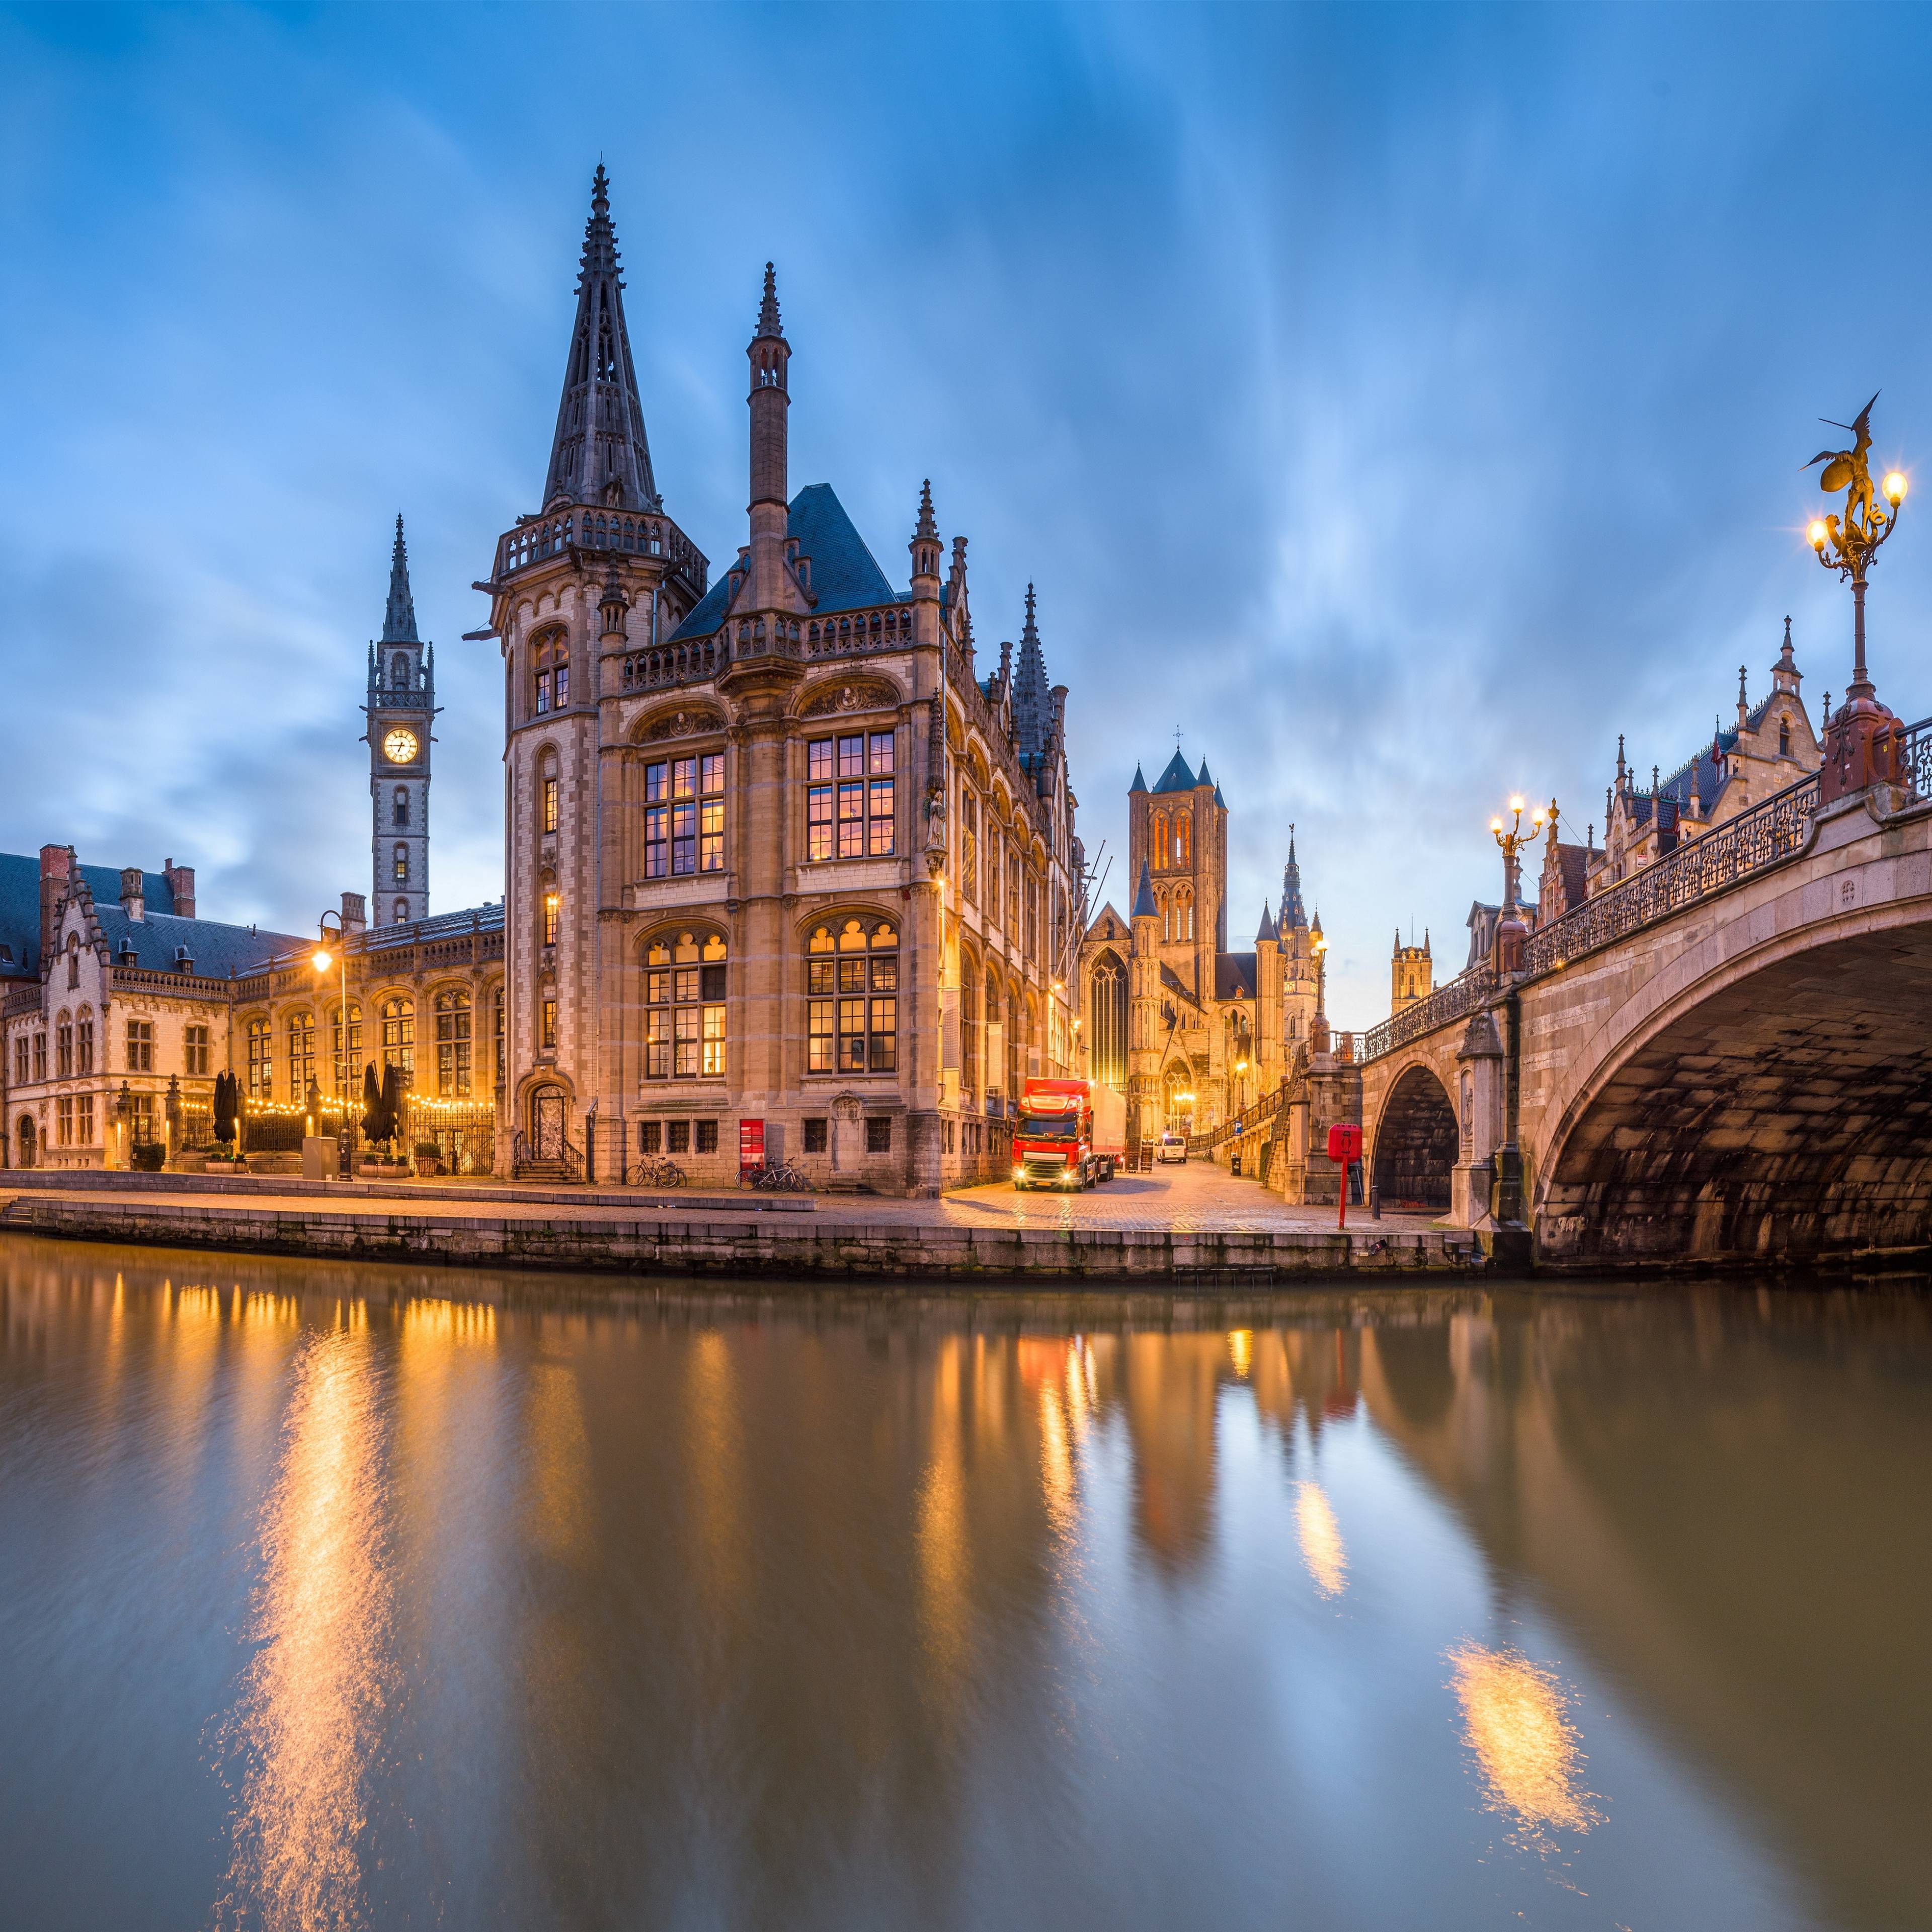 The Gothic and Art Tour of Belgium